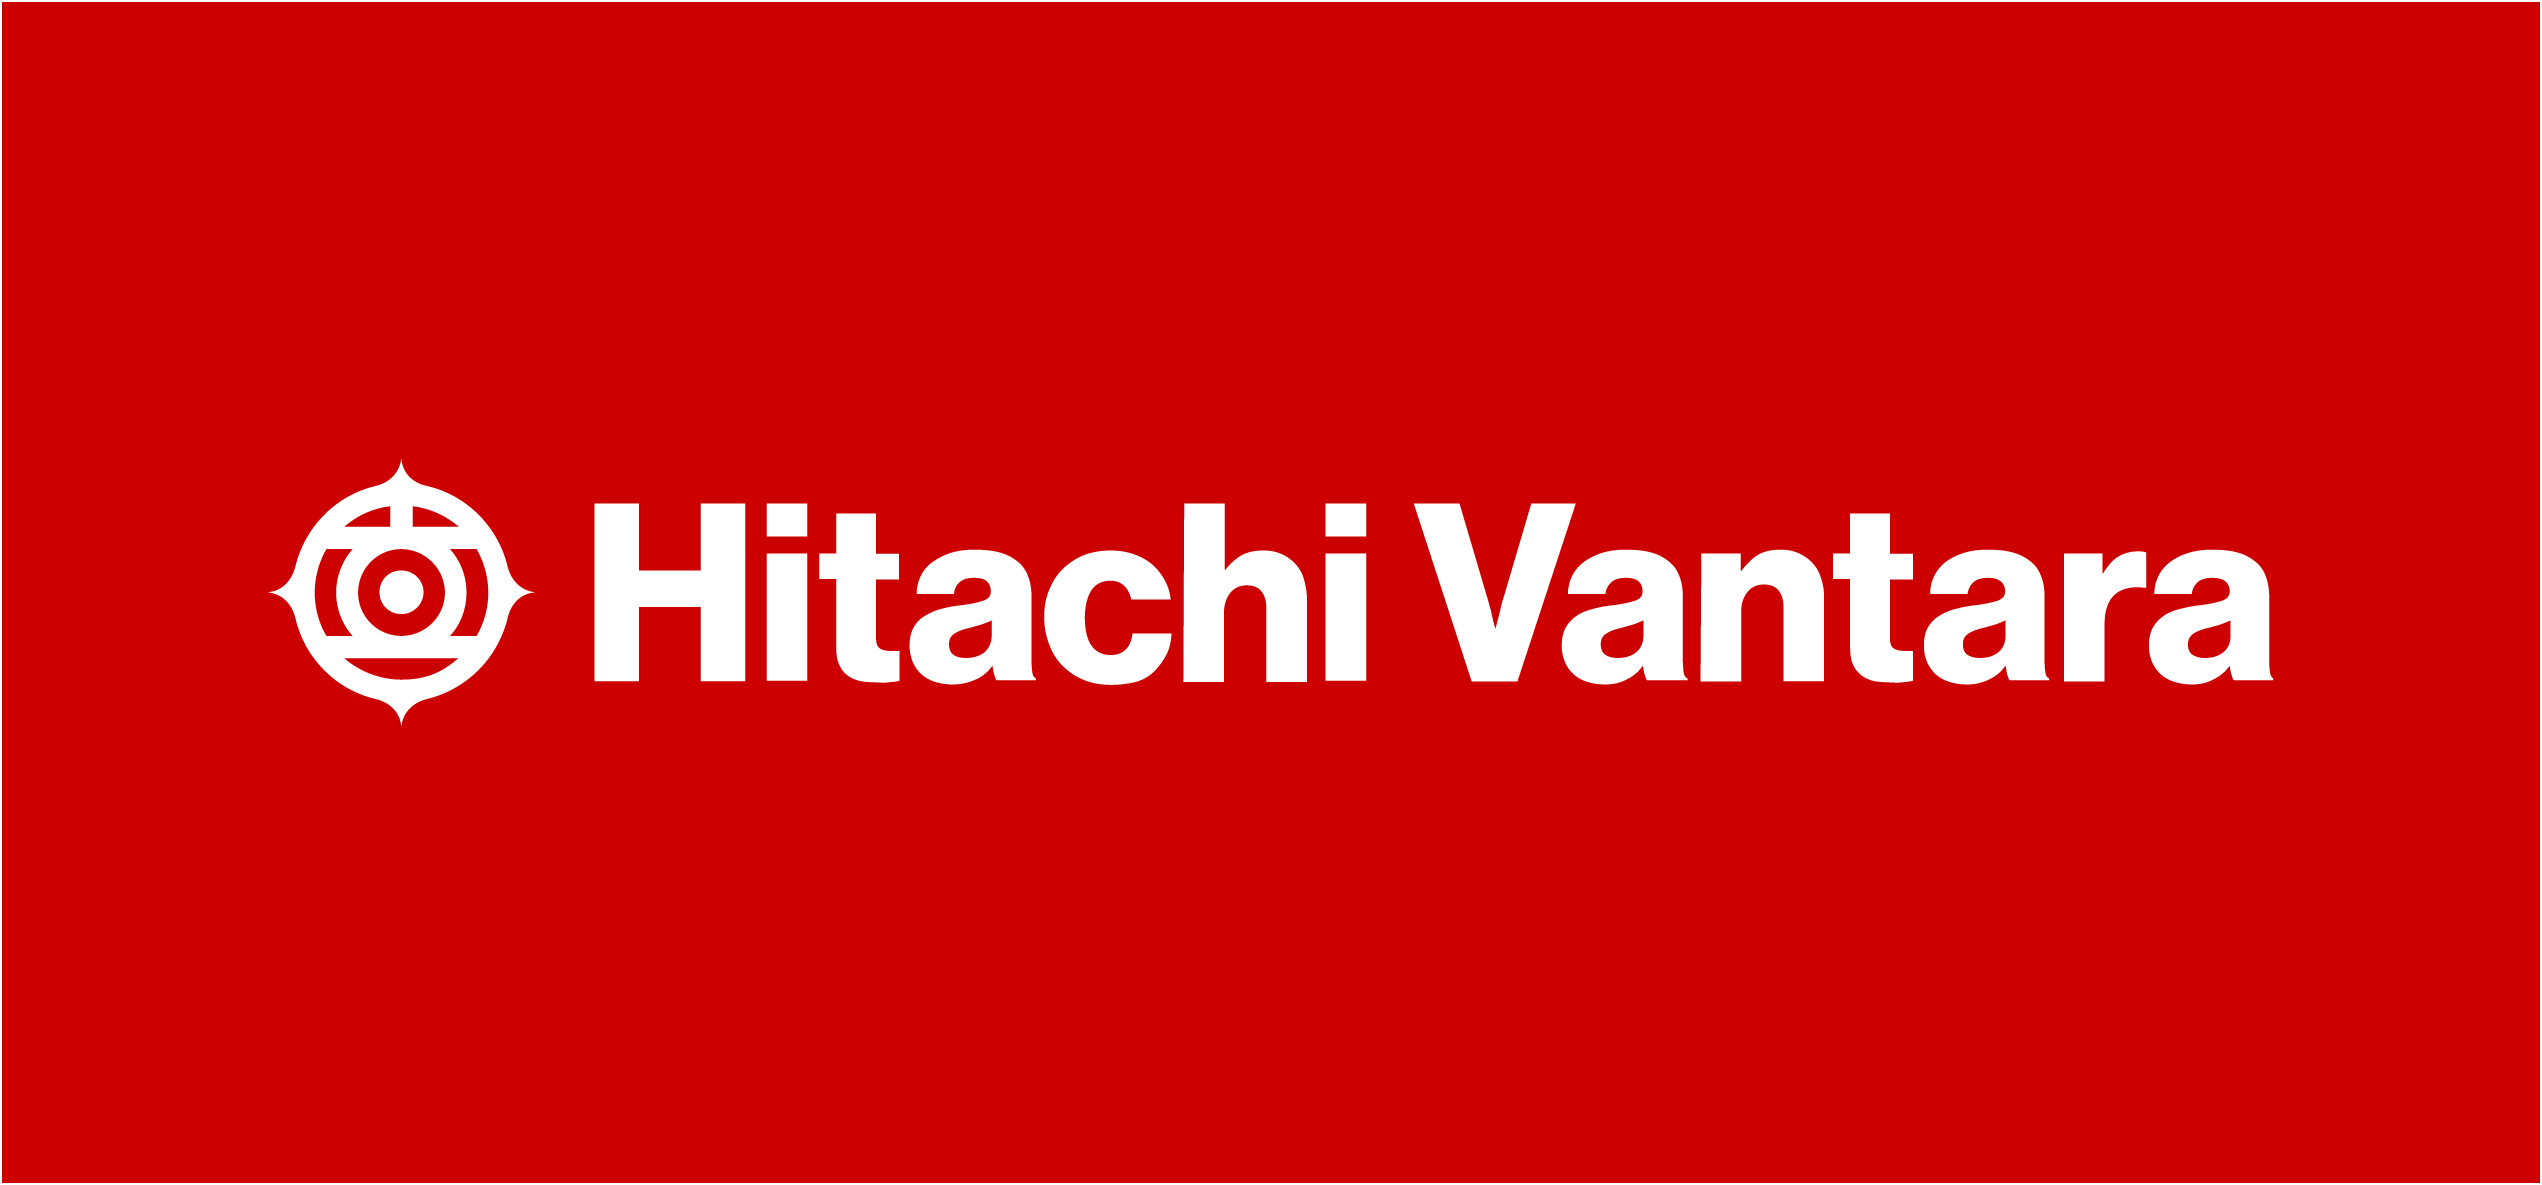 Visit Hitachi